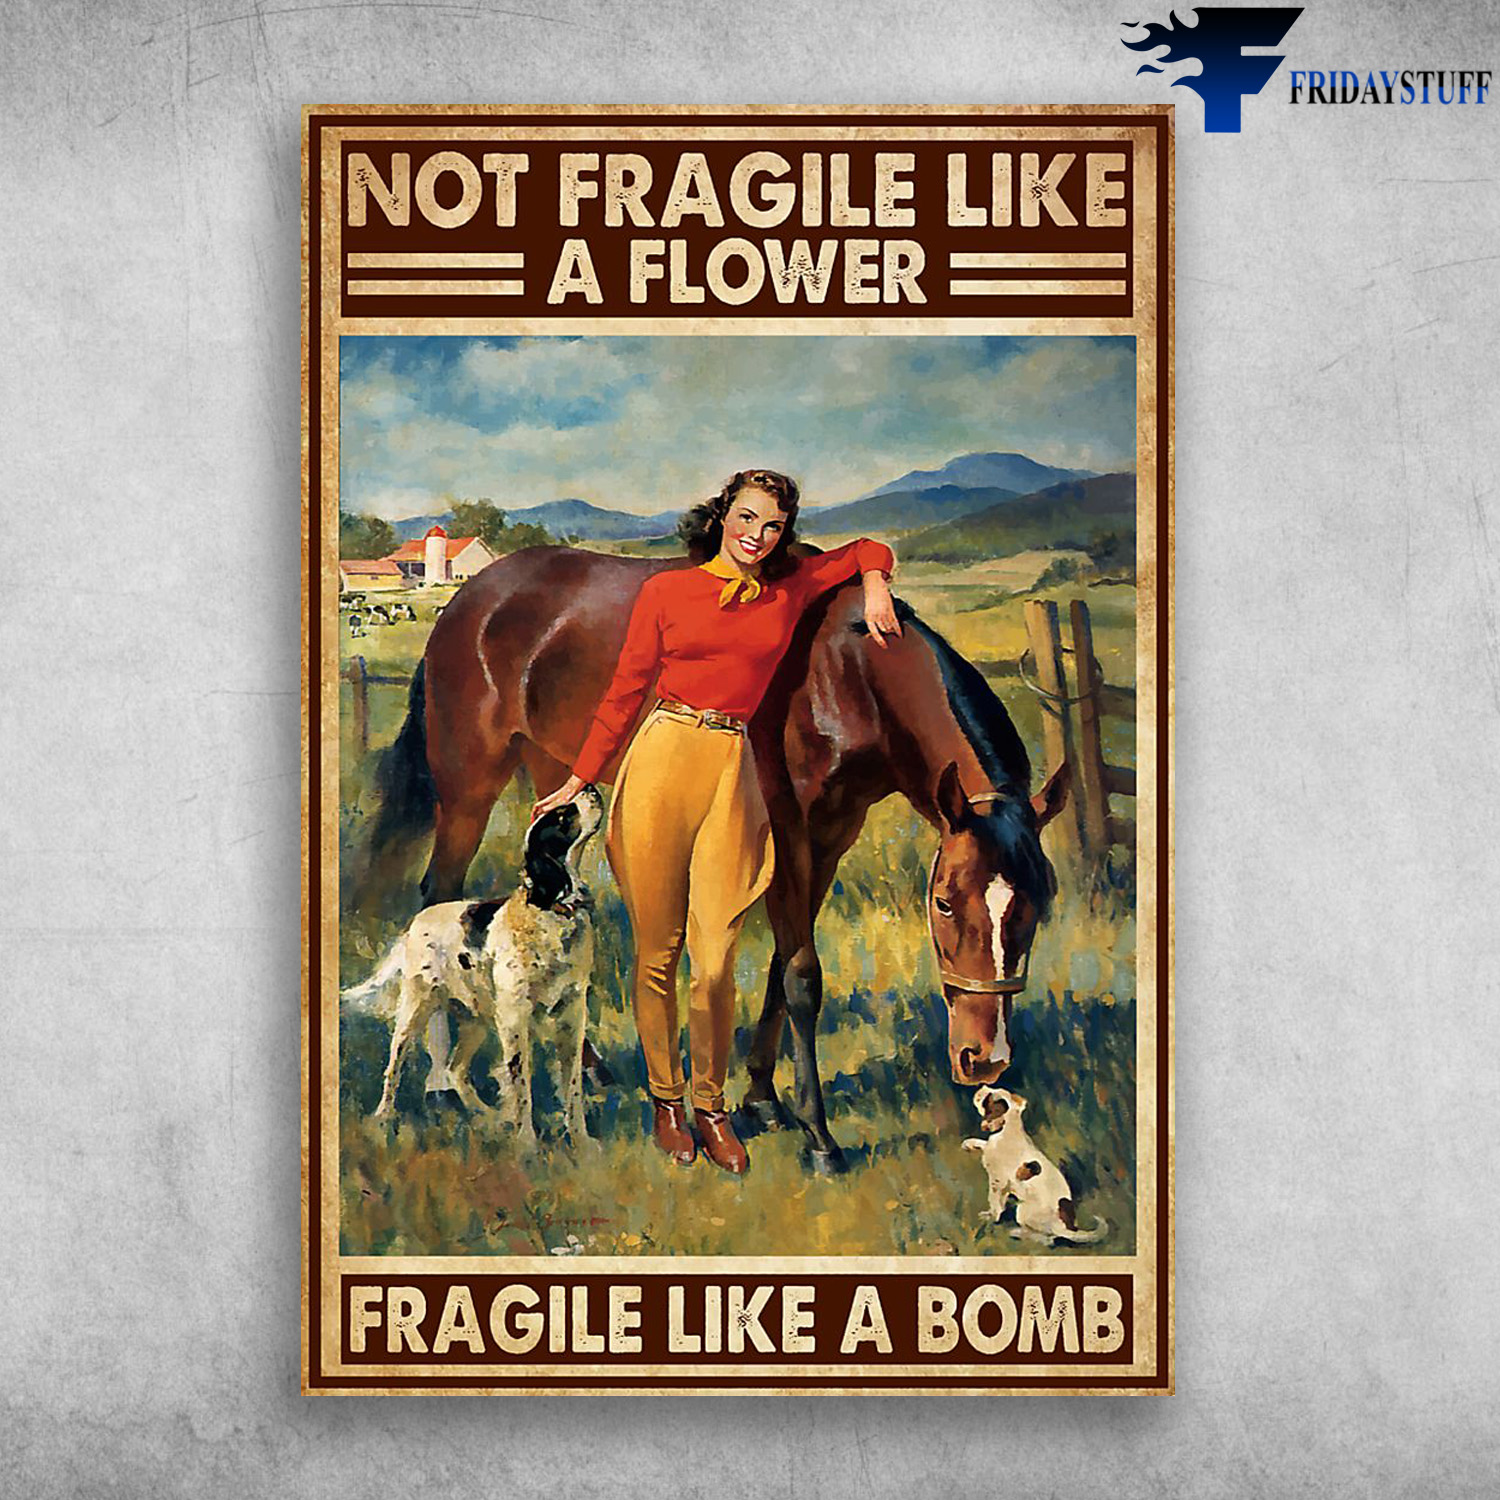 Girl Loves Dog And Horse - Not Fragile Like A Flower, Fragile Like A Bomb